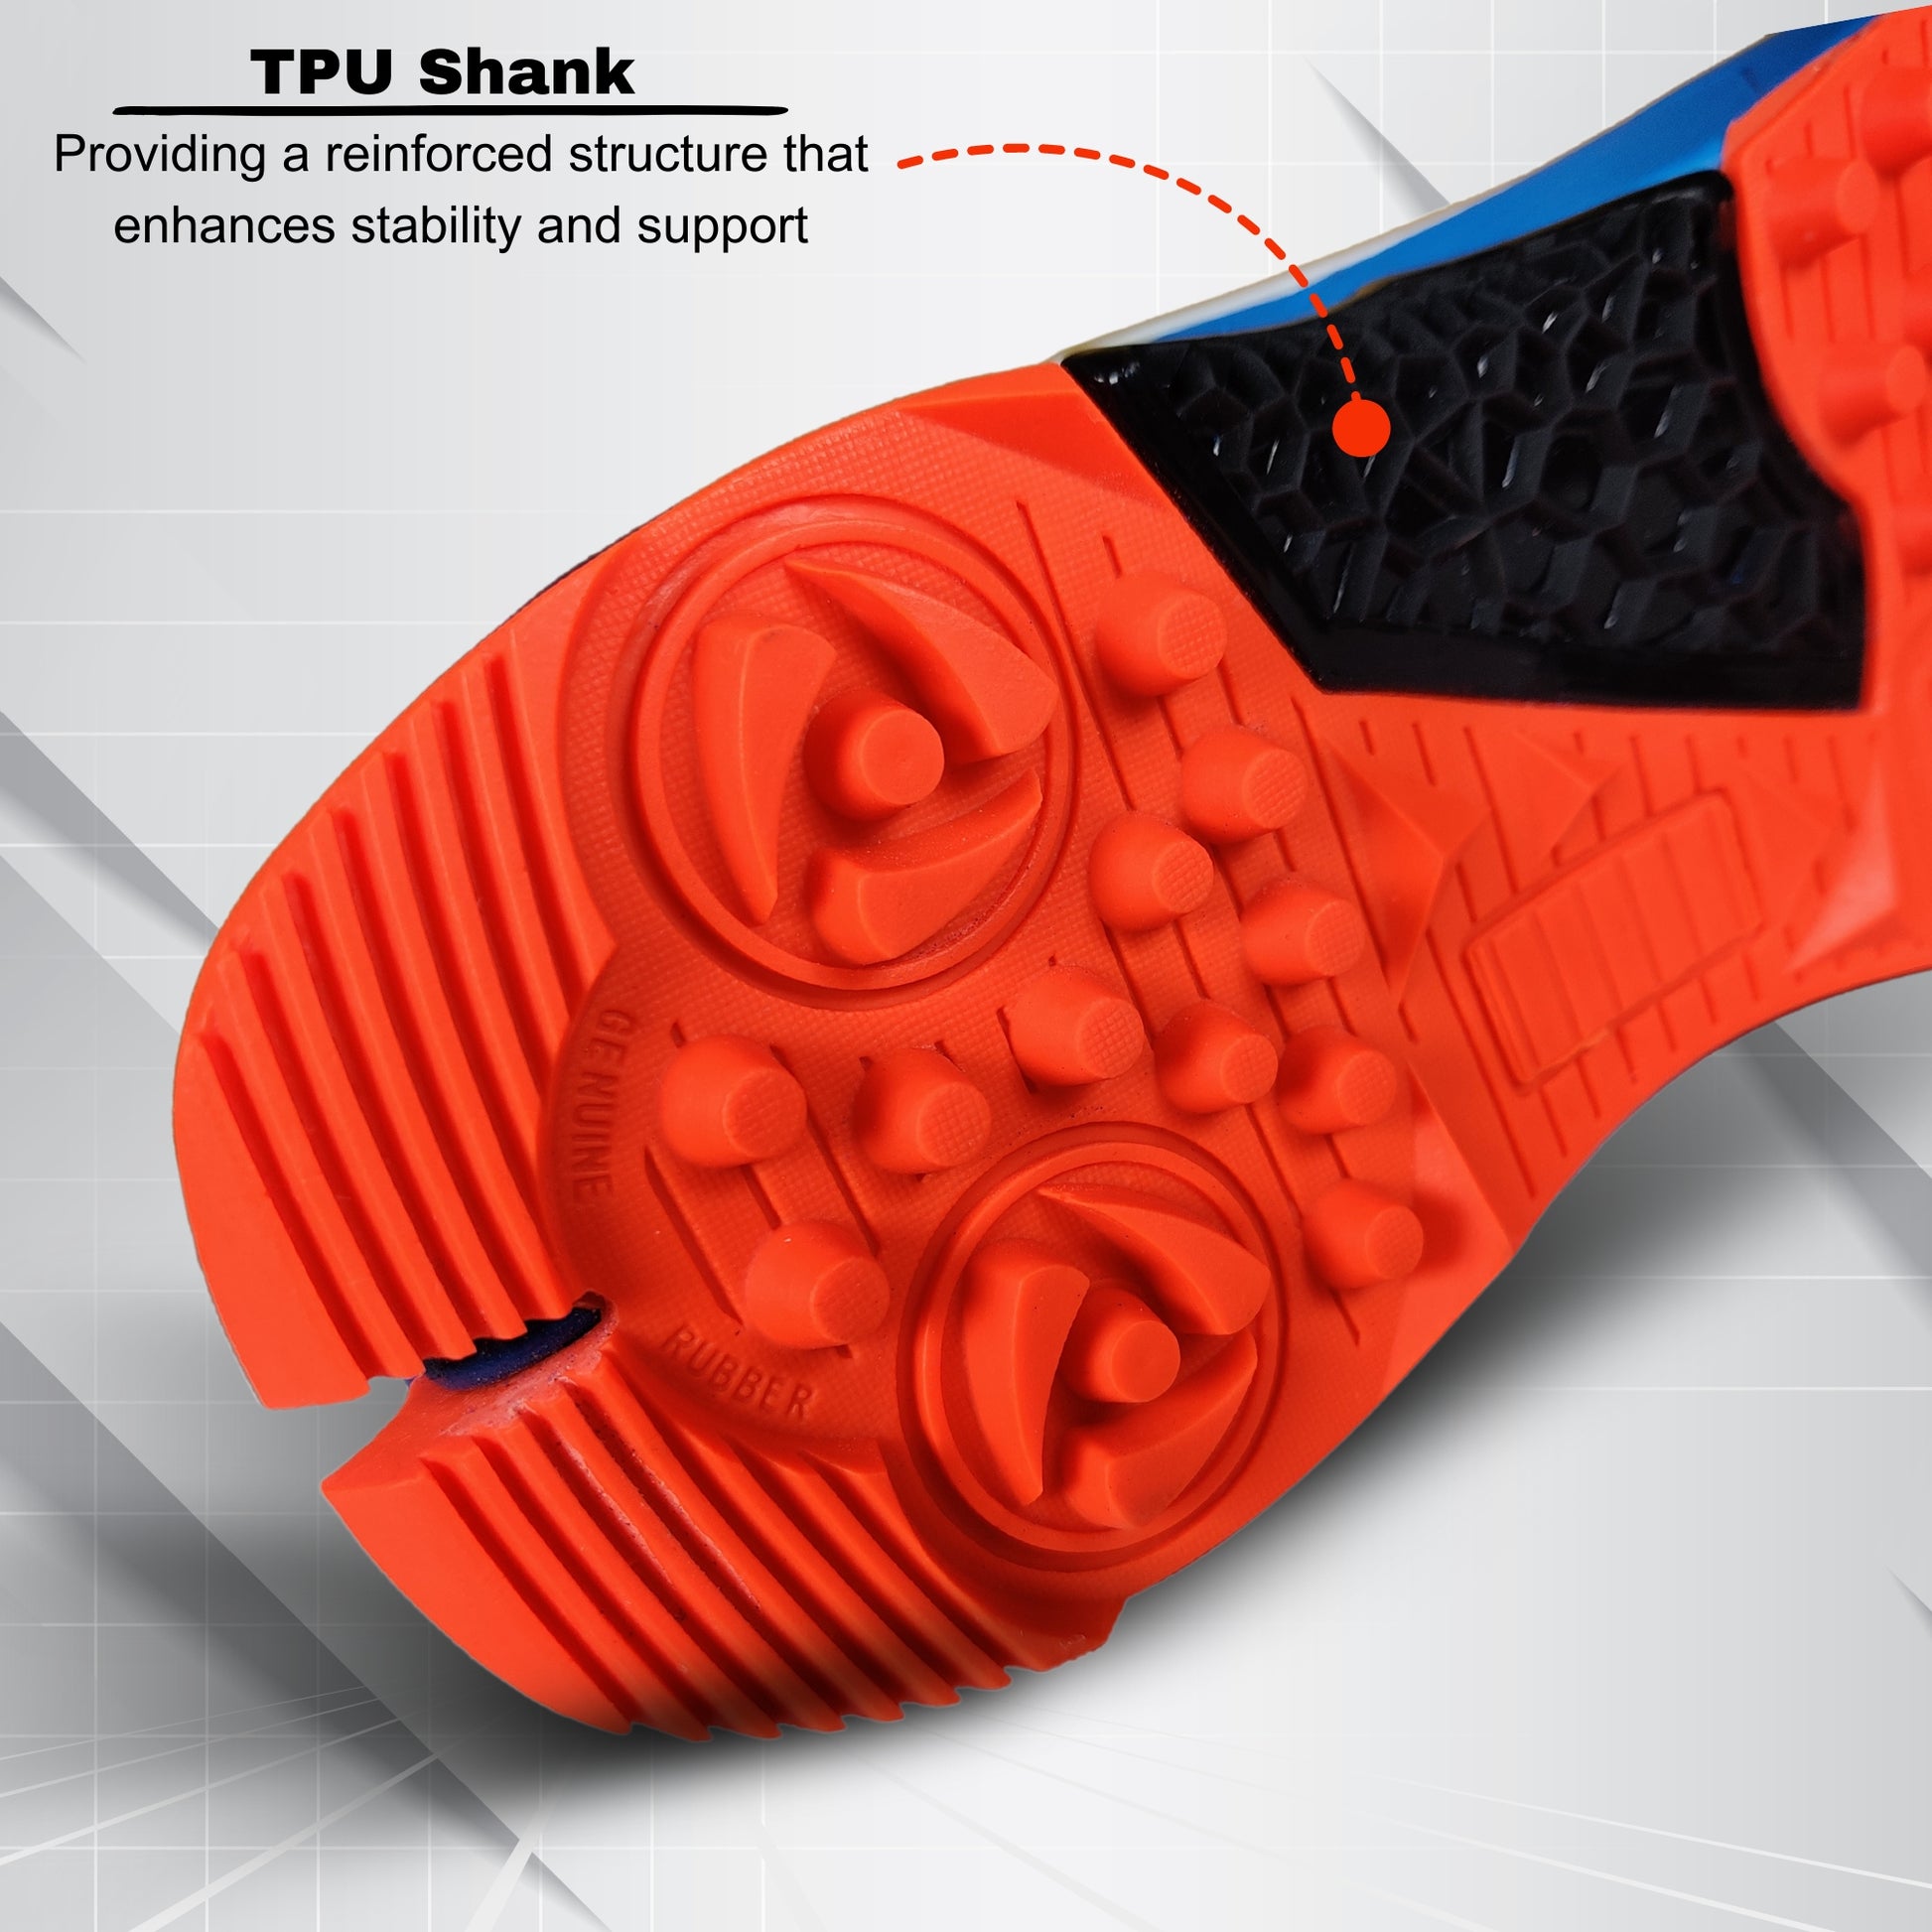 Prokick Strikers Genuine Rubber Spike Cricket Shoes - Best Price online Prokicksports.com